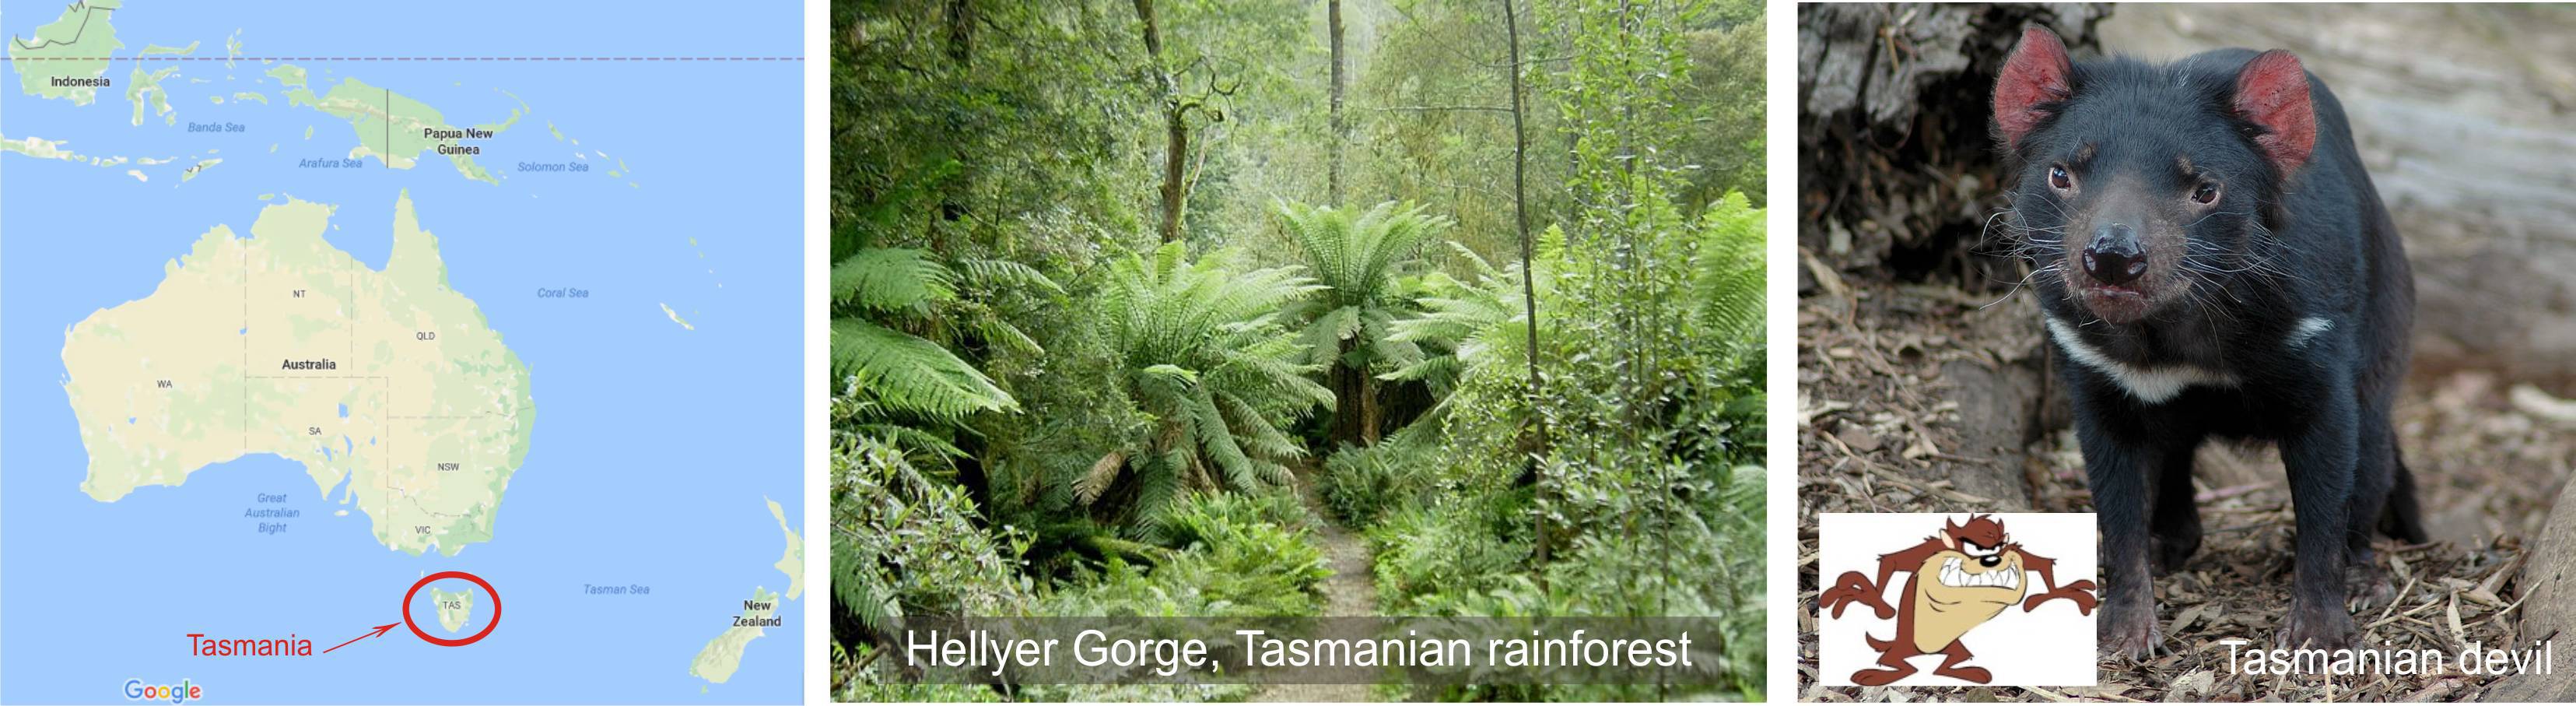 rainforest and tasmanian devil